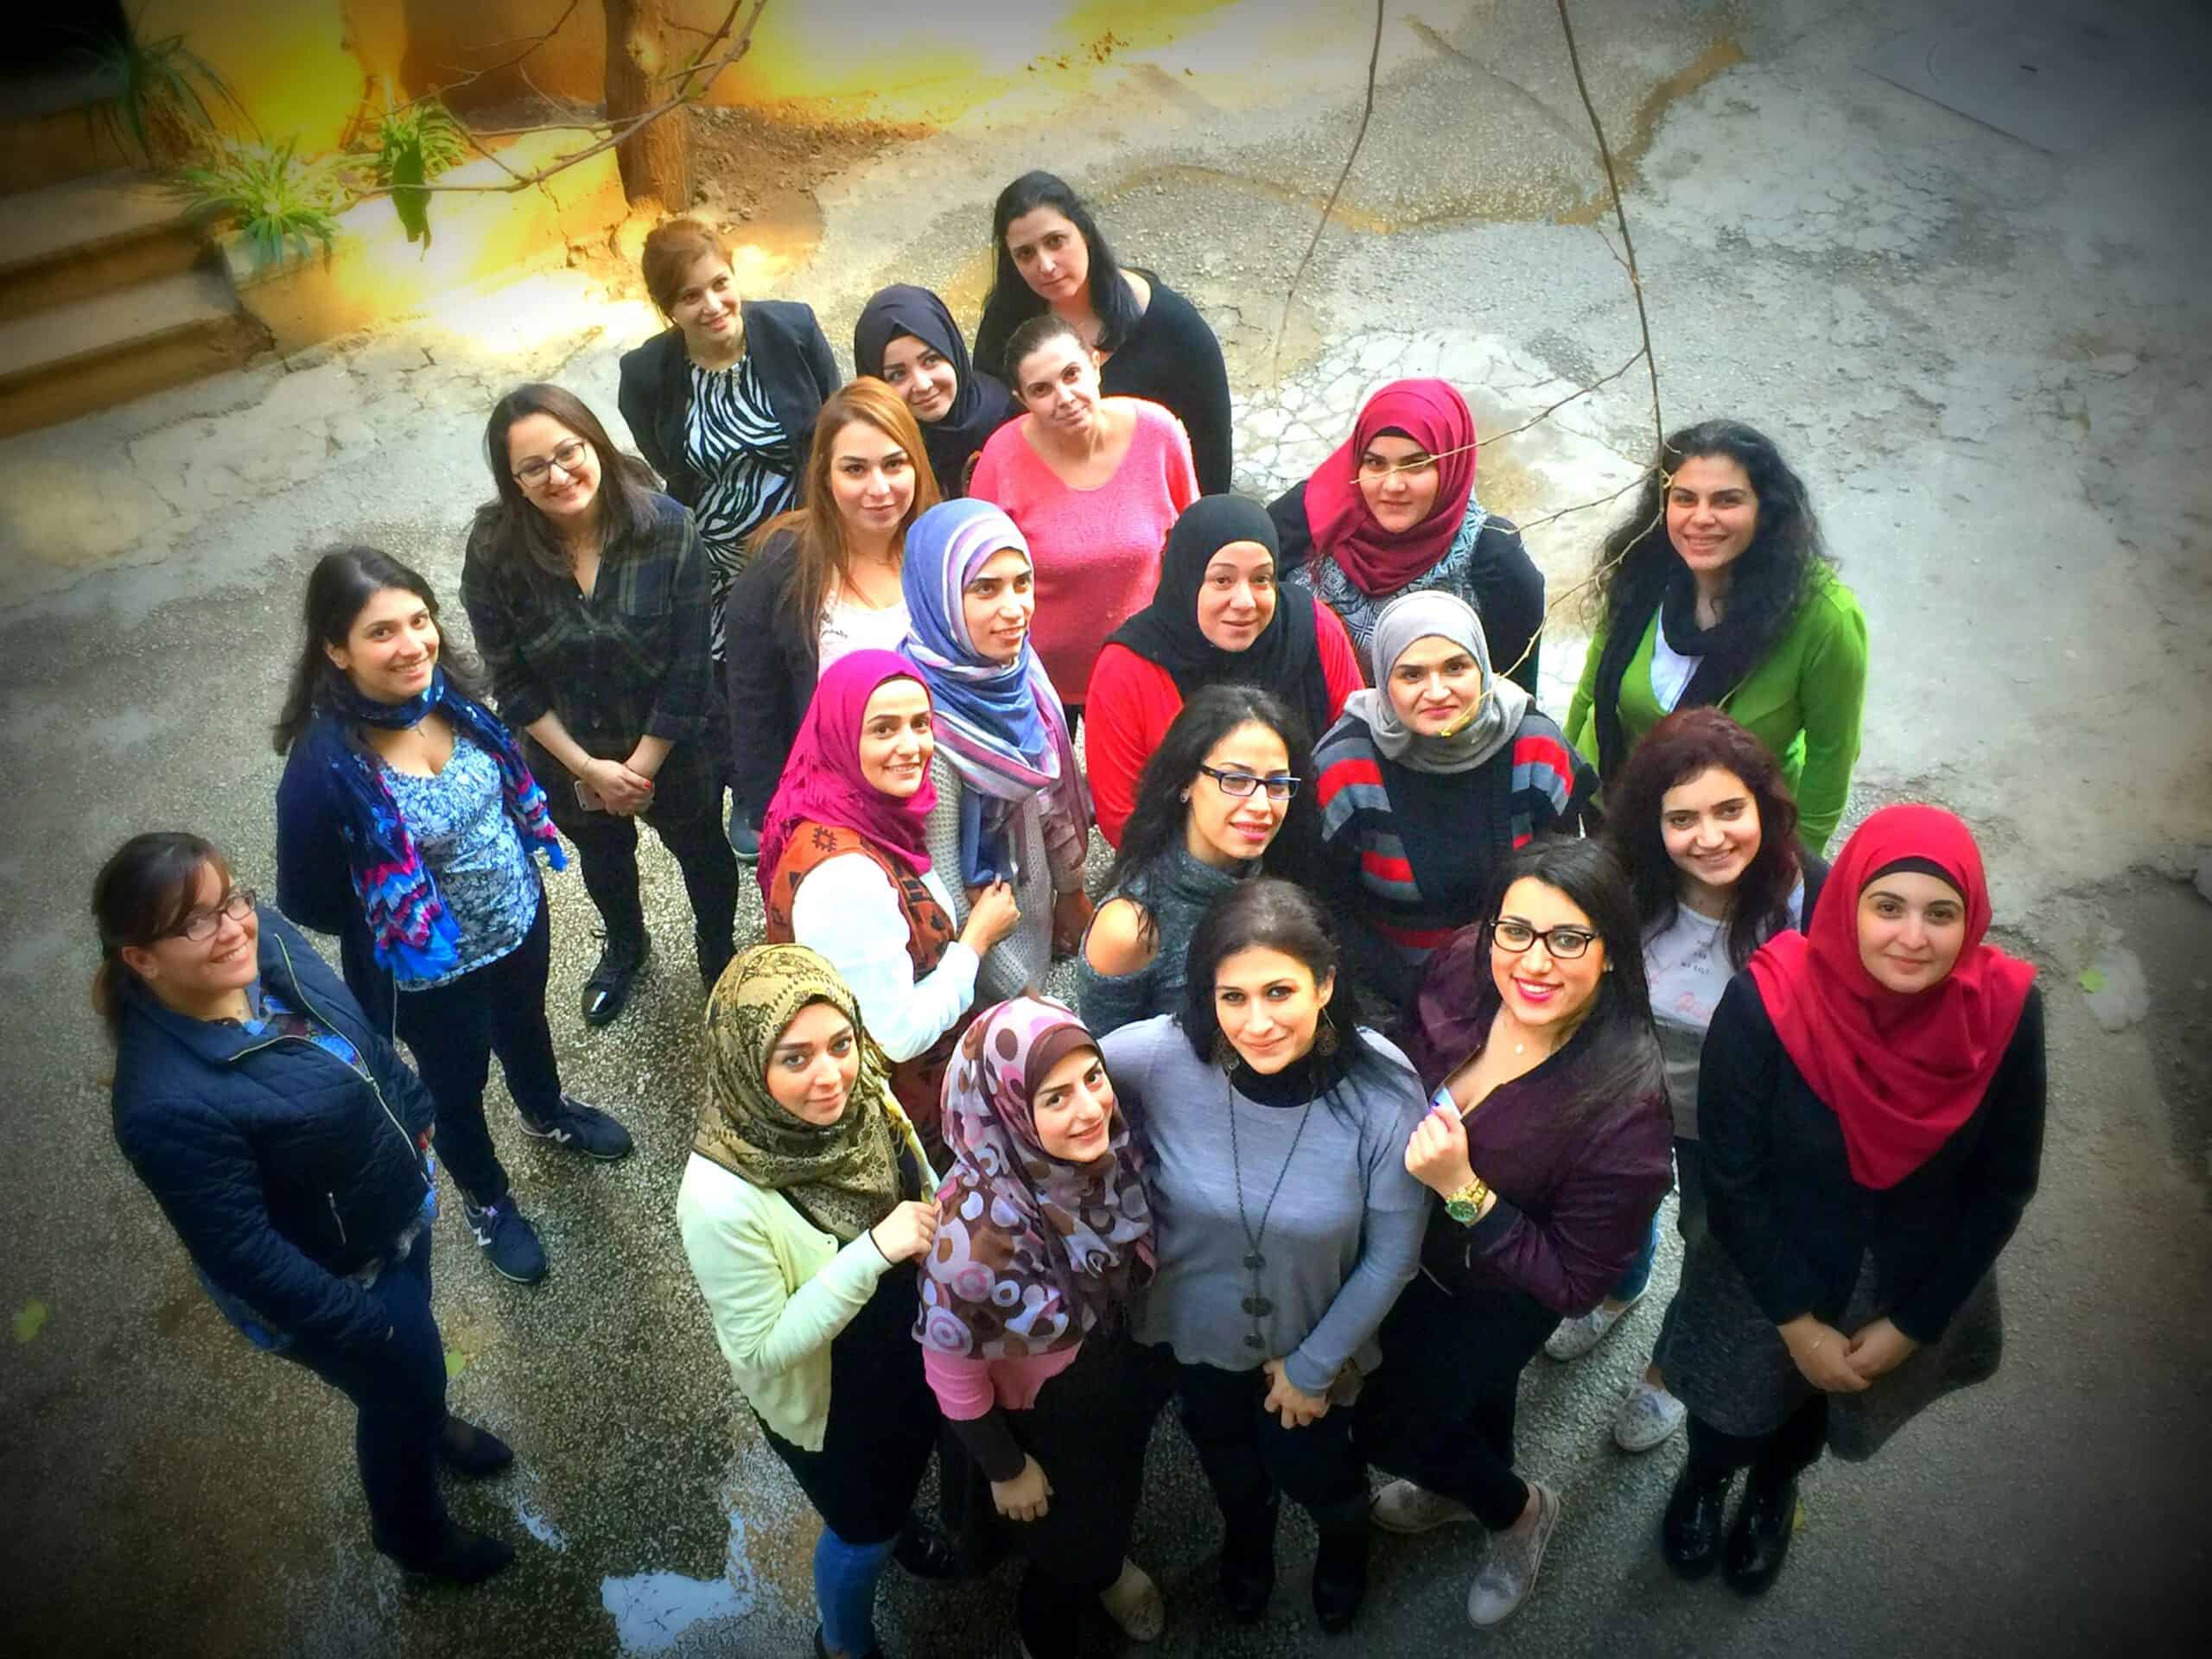 A model for genderdiverse leadership in Lebanon Women's